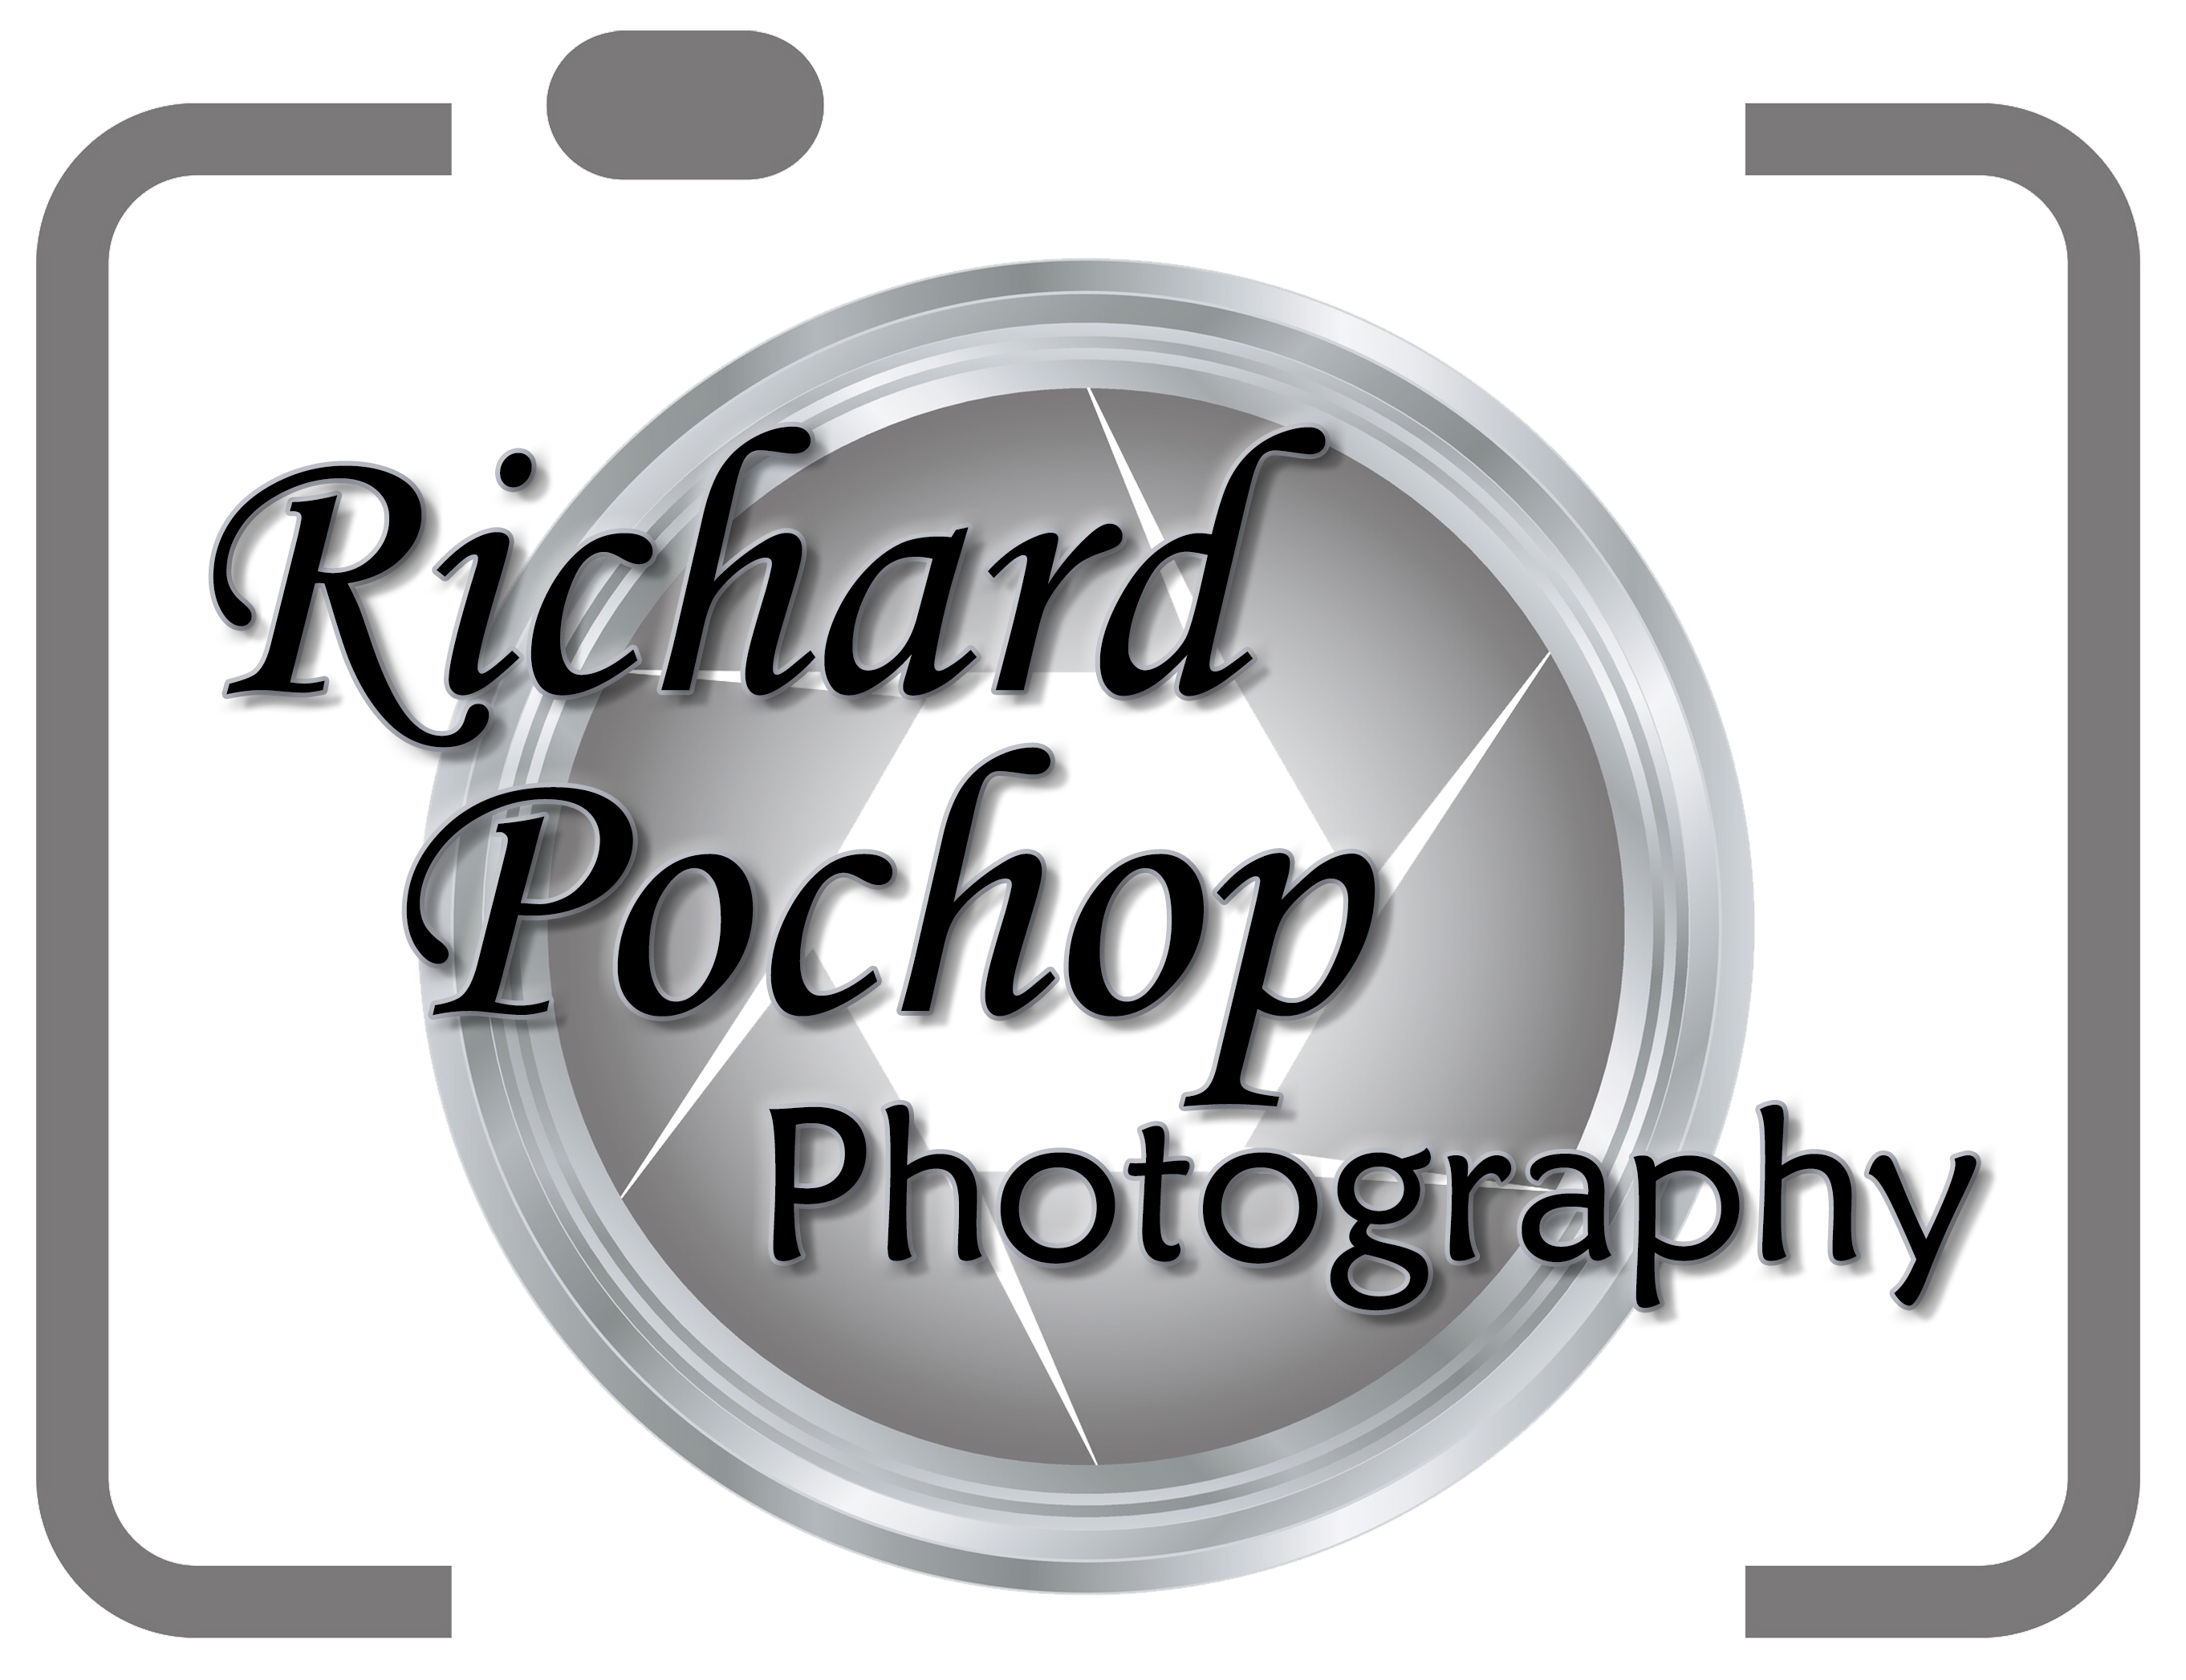 Richard Pochop